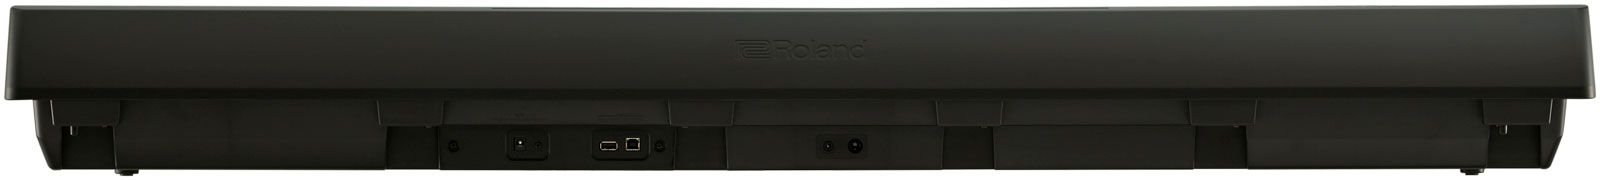 Roland FP-10